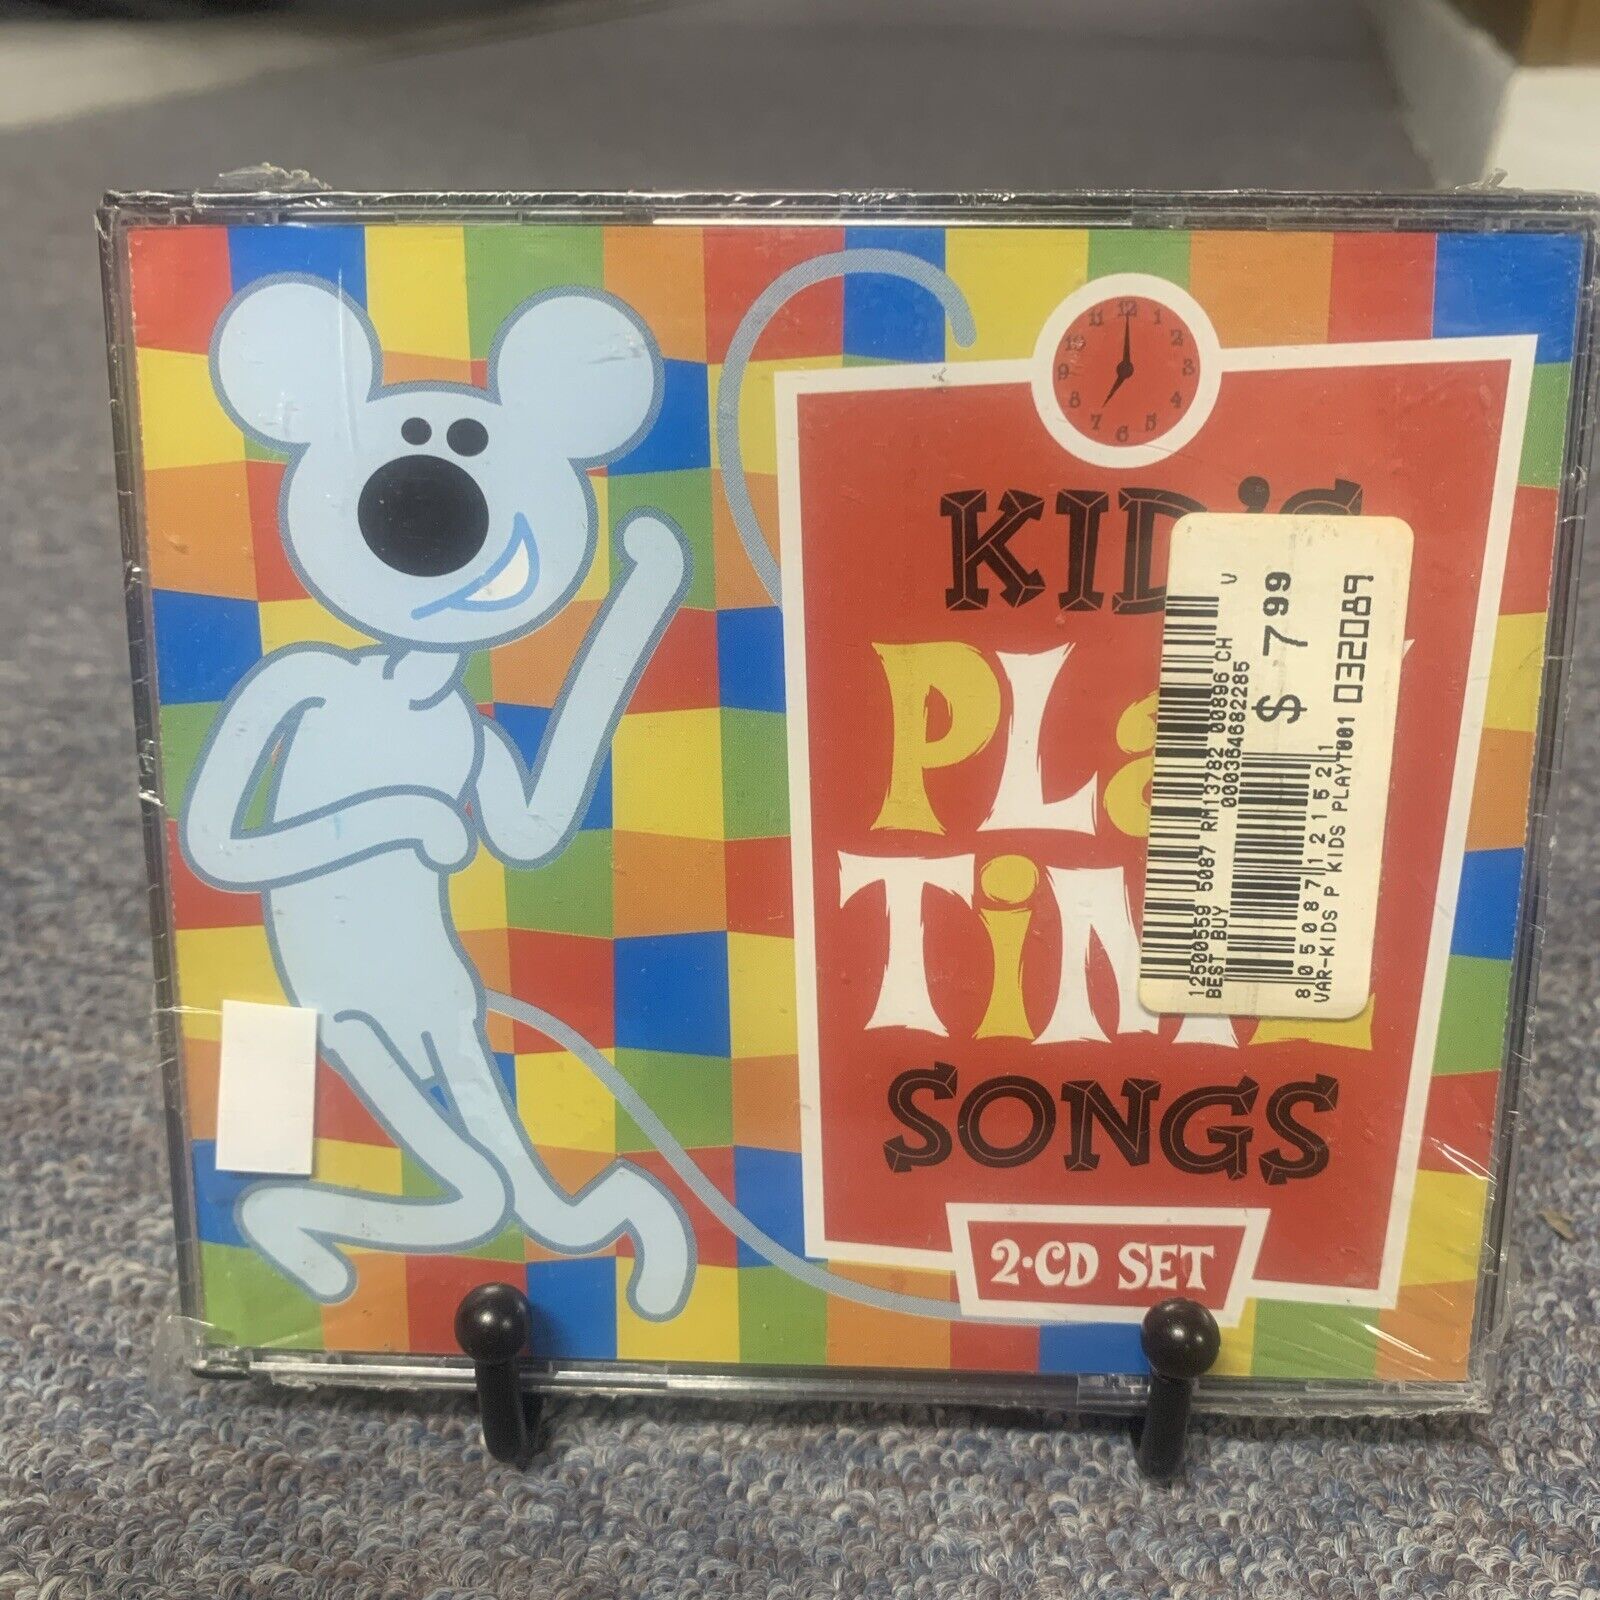 Kid's Playtime Songs by Various Artists (CD, Jun-2002, K-Tel Distribution)